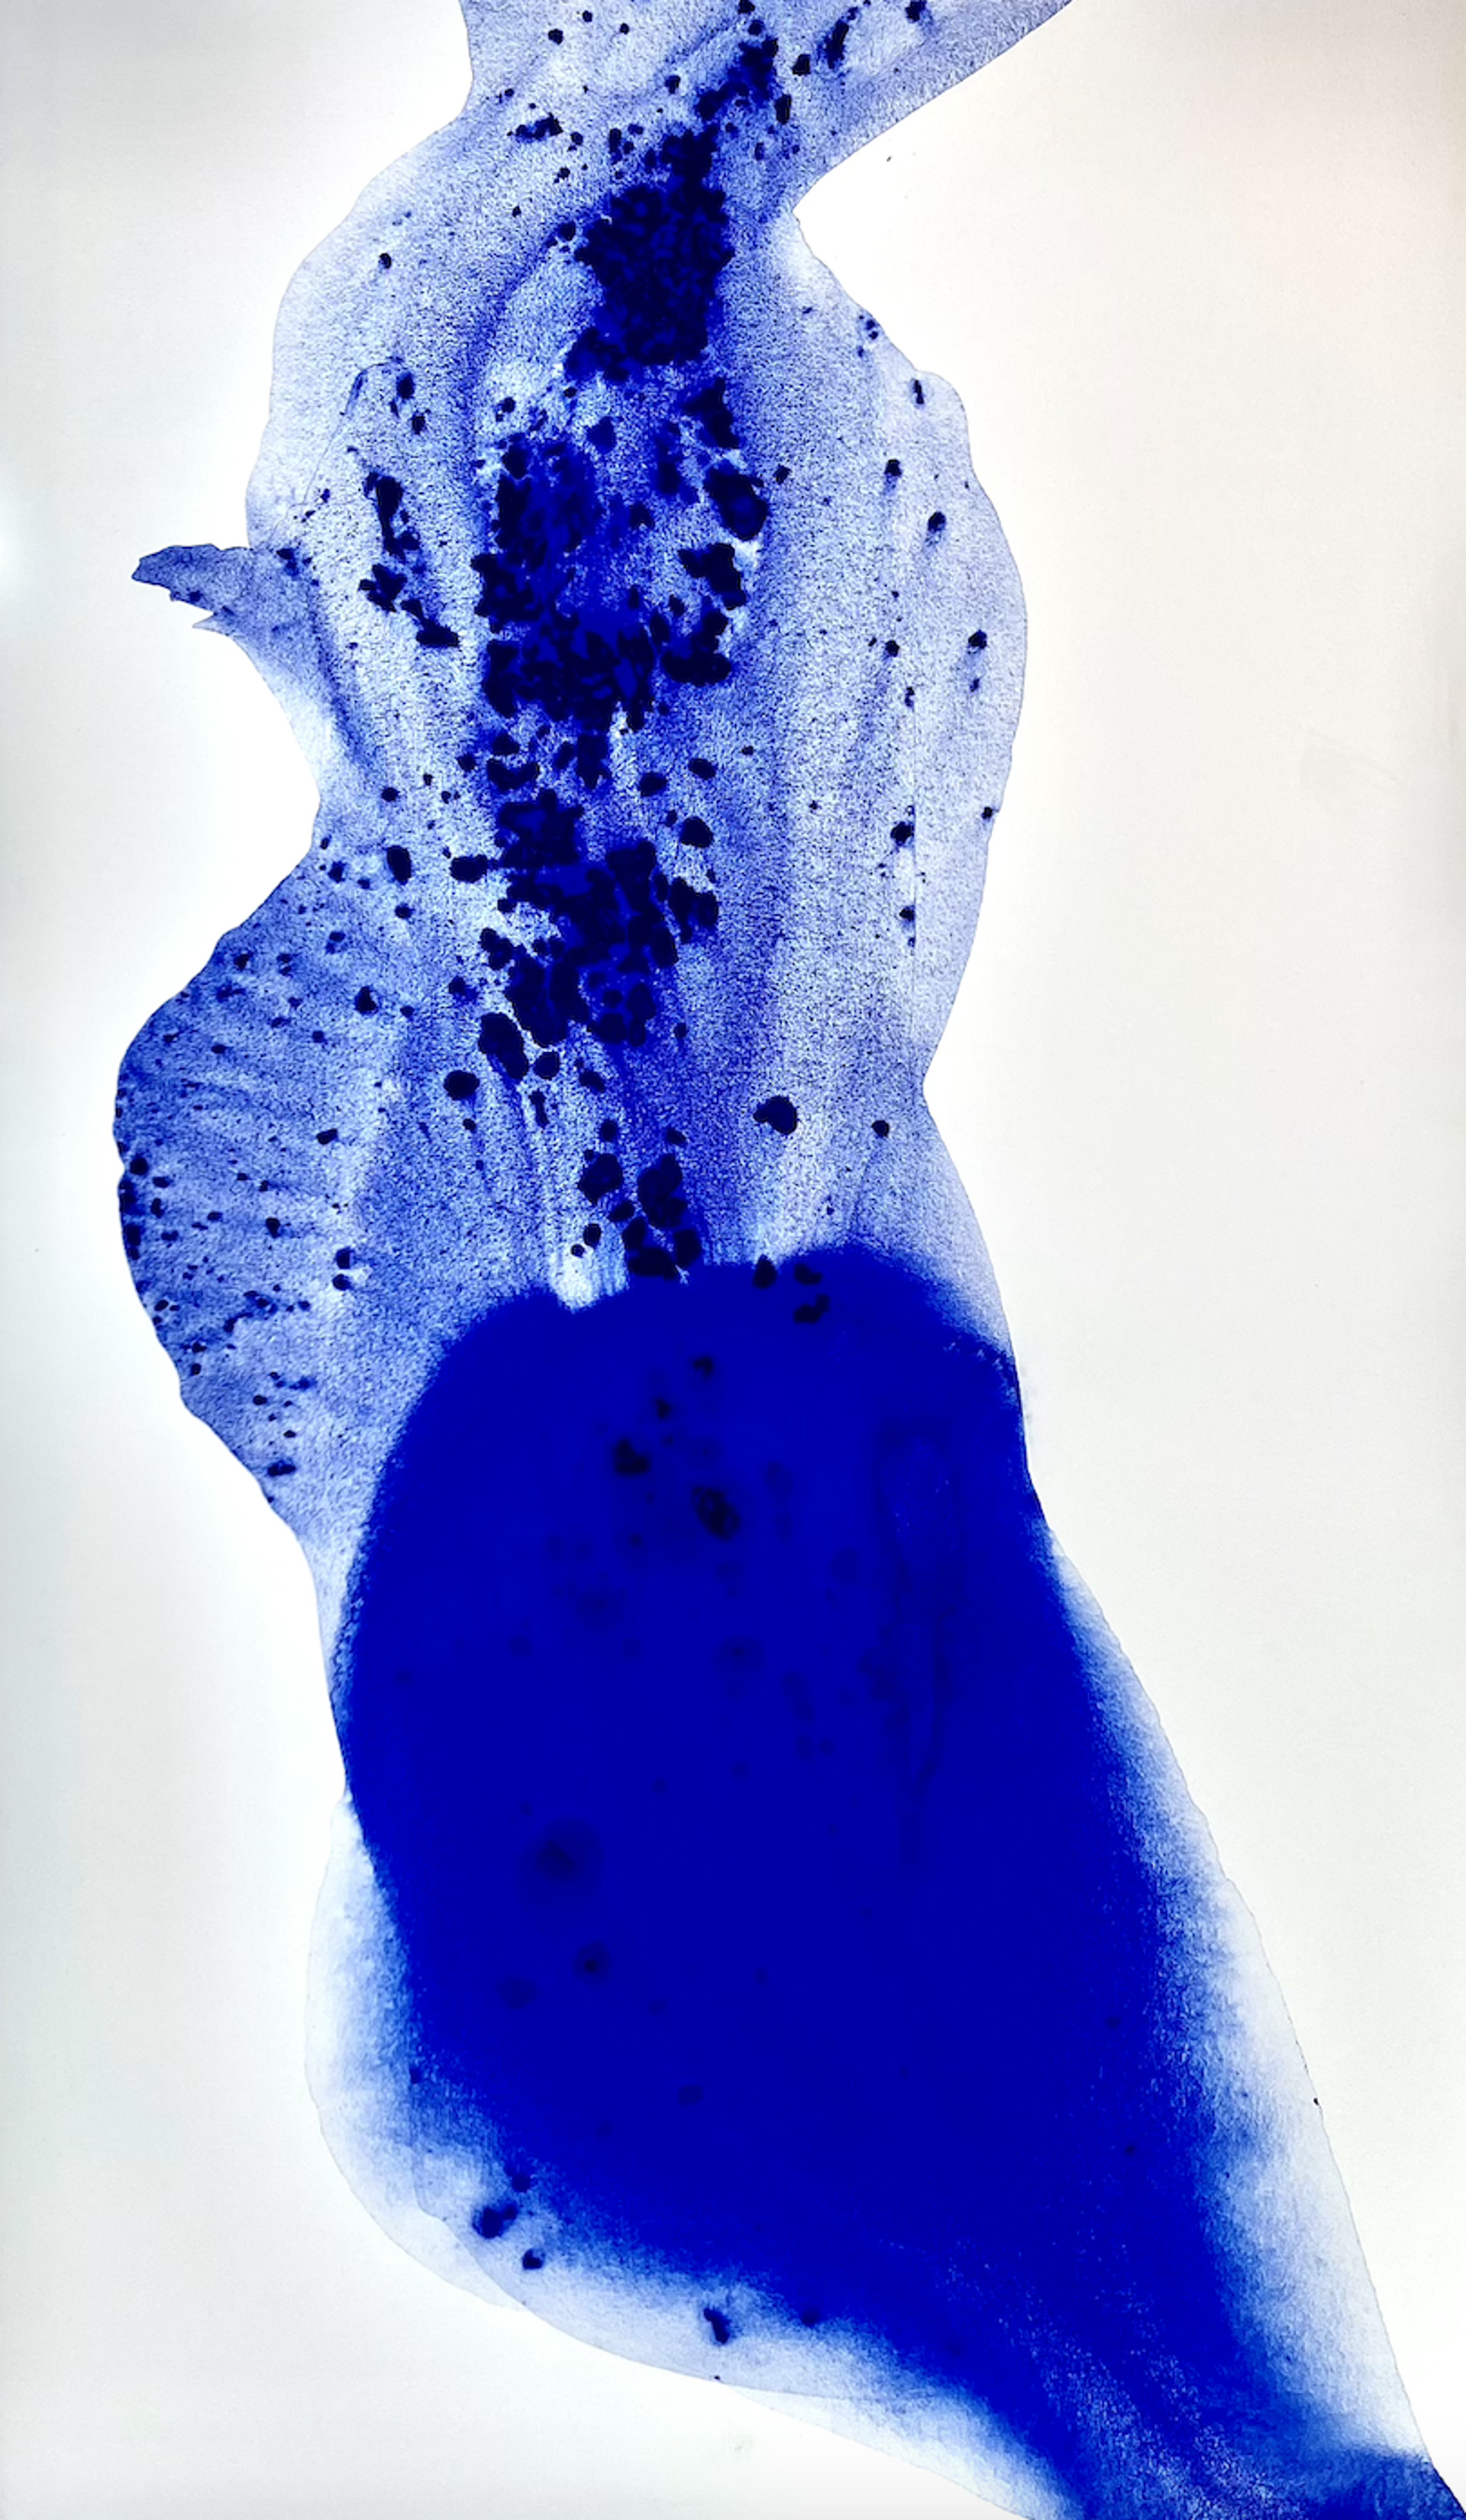 Visions in Blue by Clara Berta